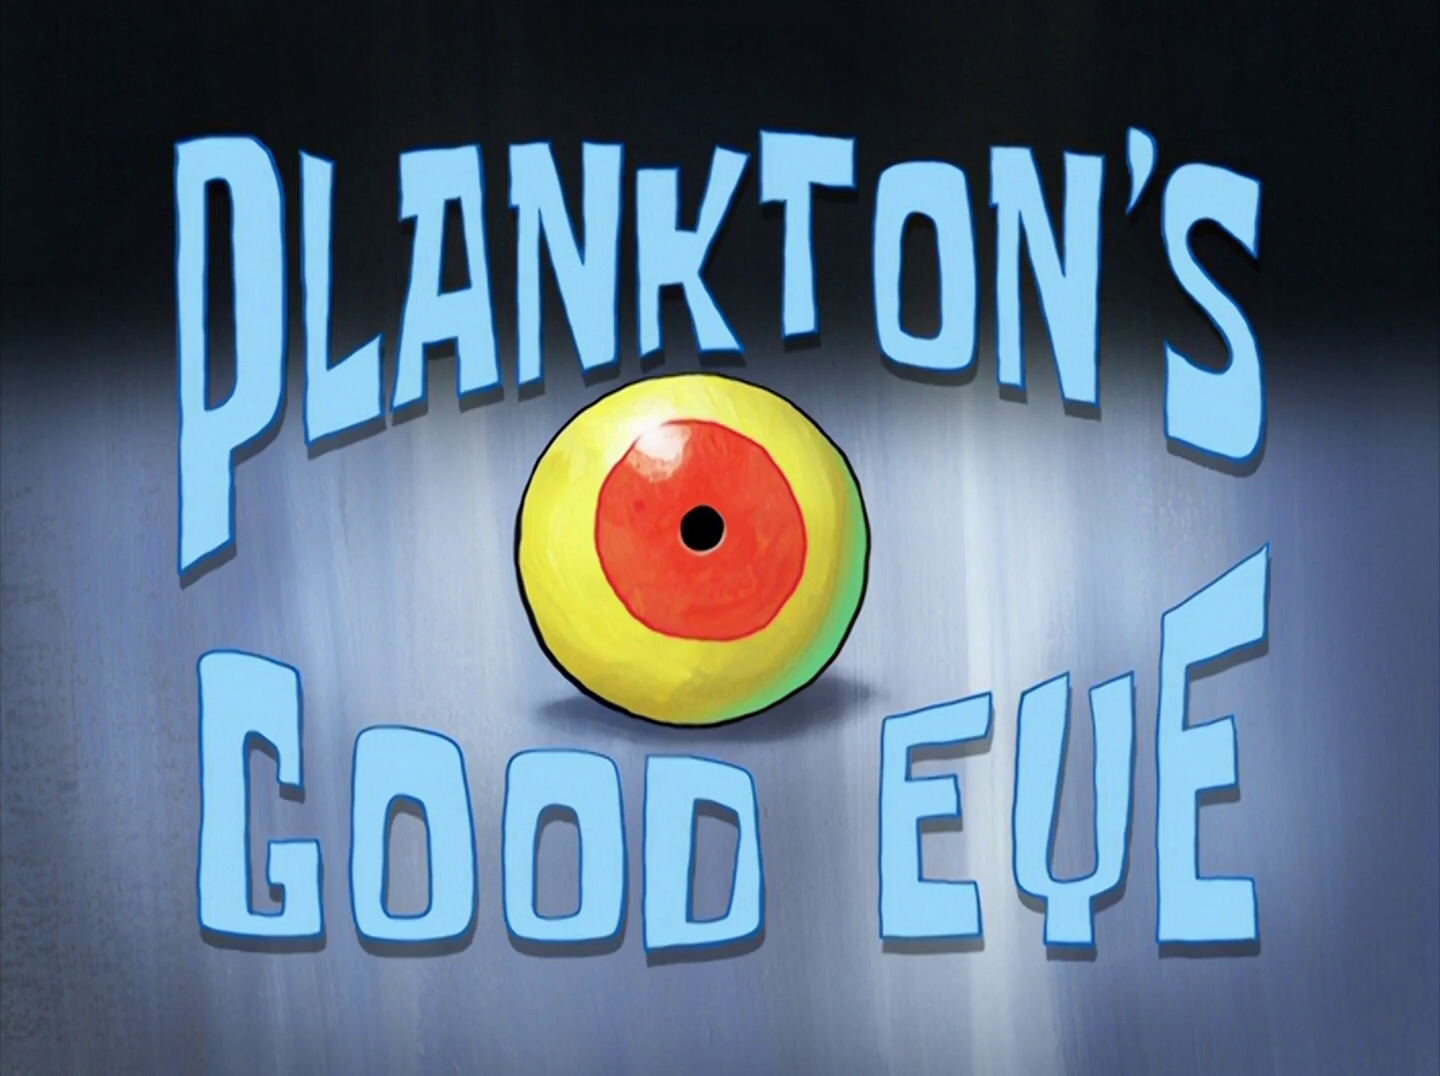 Plankton's Good Eye - Encyclopedia SpongeBobia - The SpongeBob